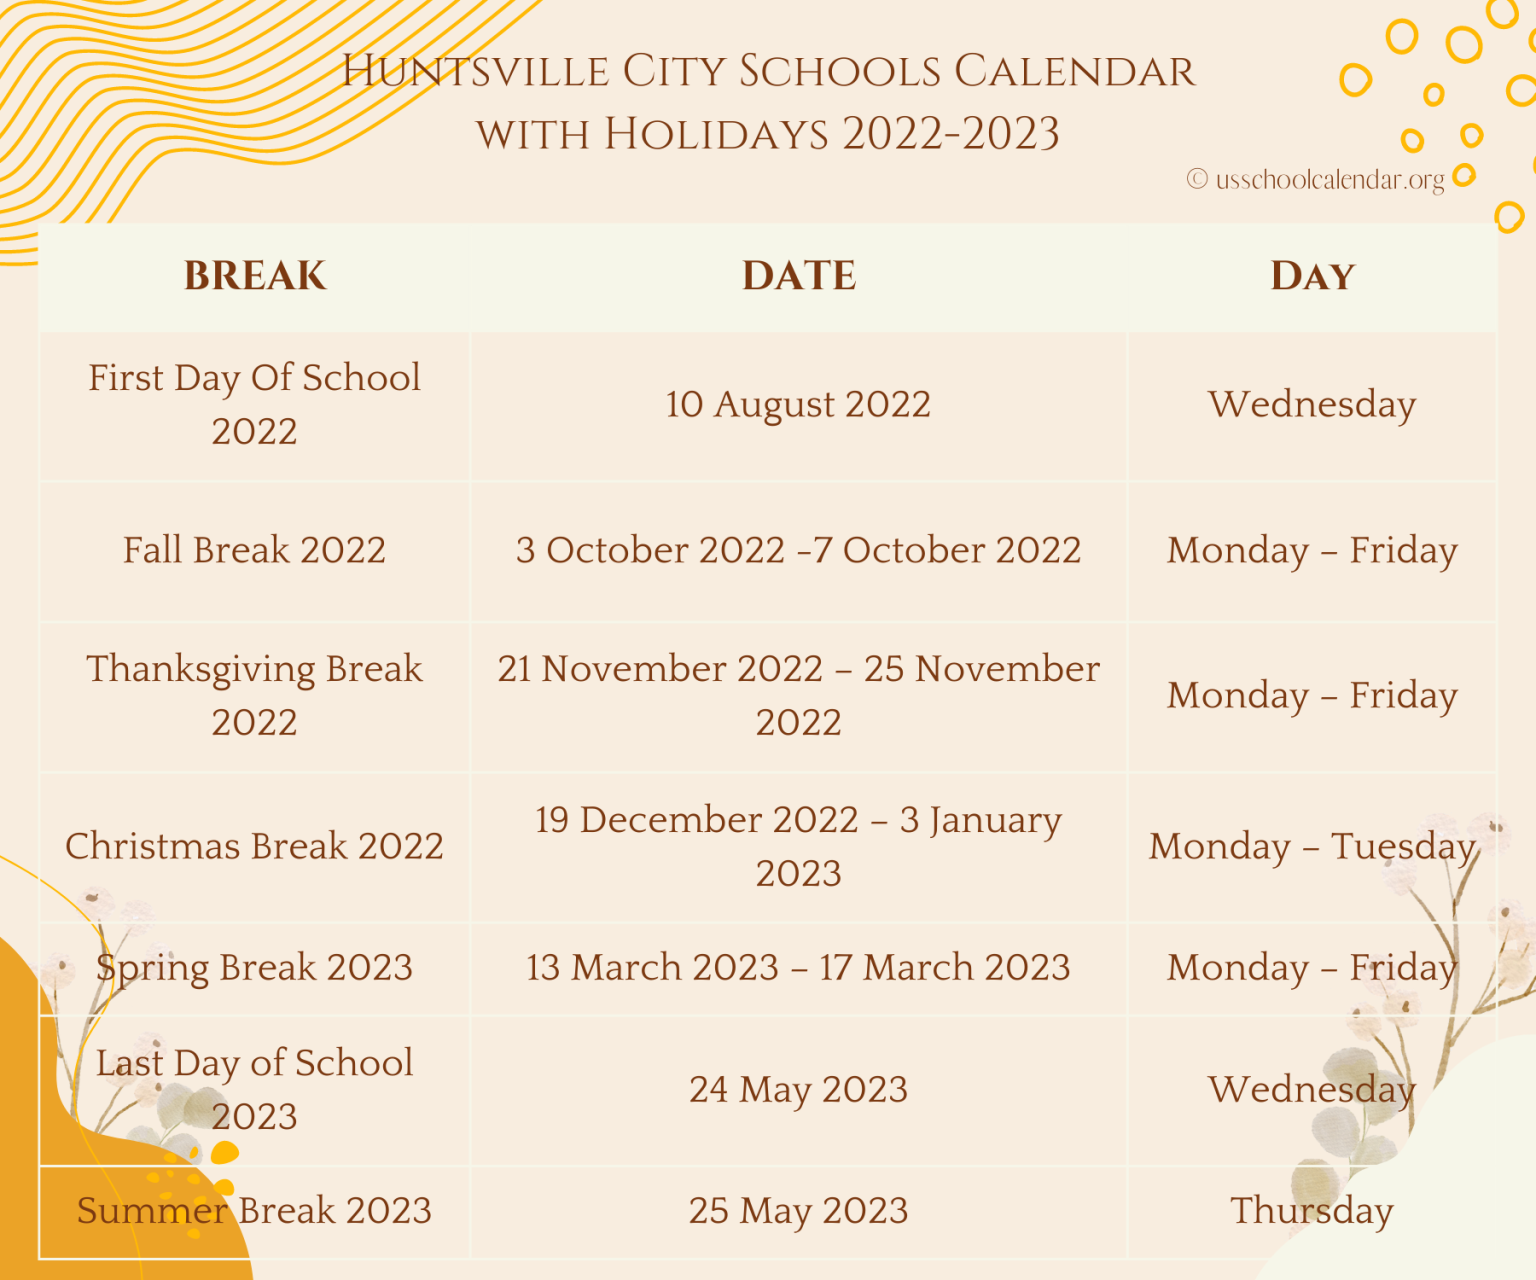 huntsville-city-schools-calendar-with-holidays-2022-2023